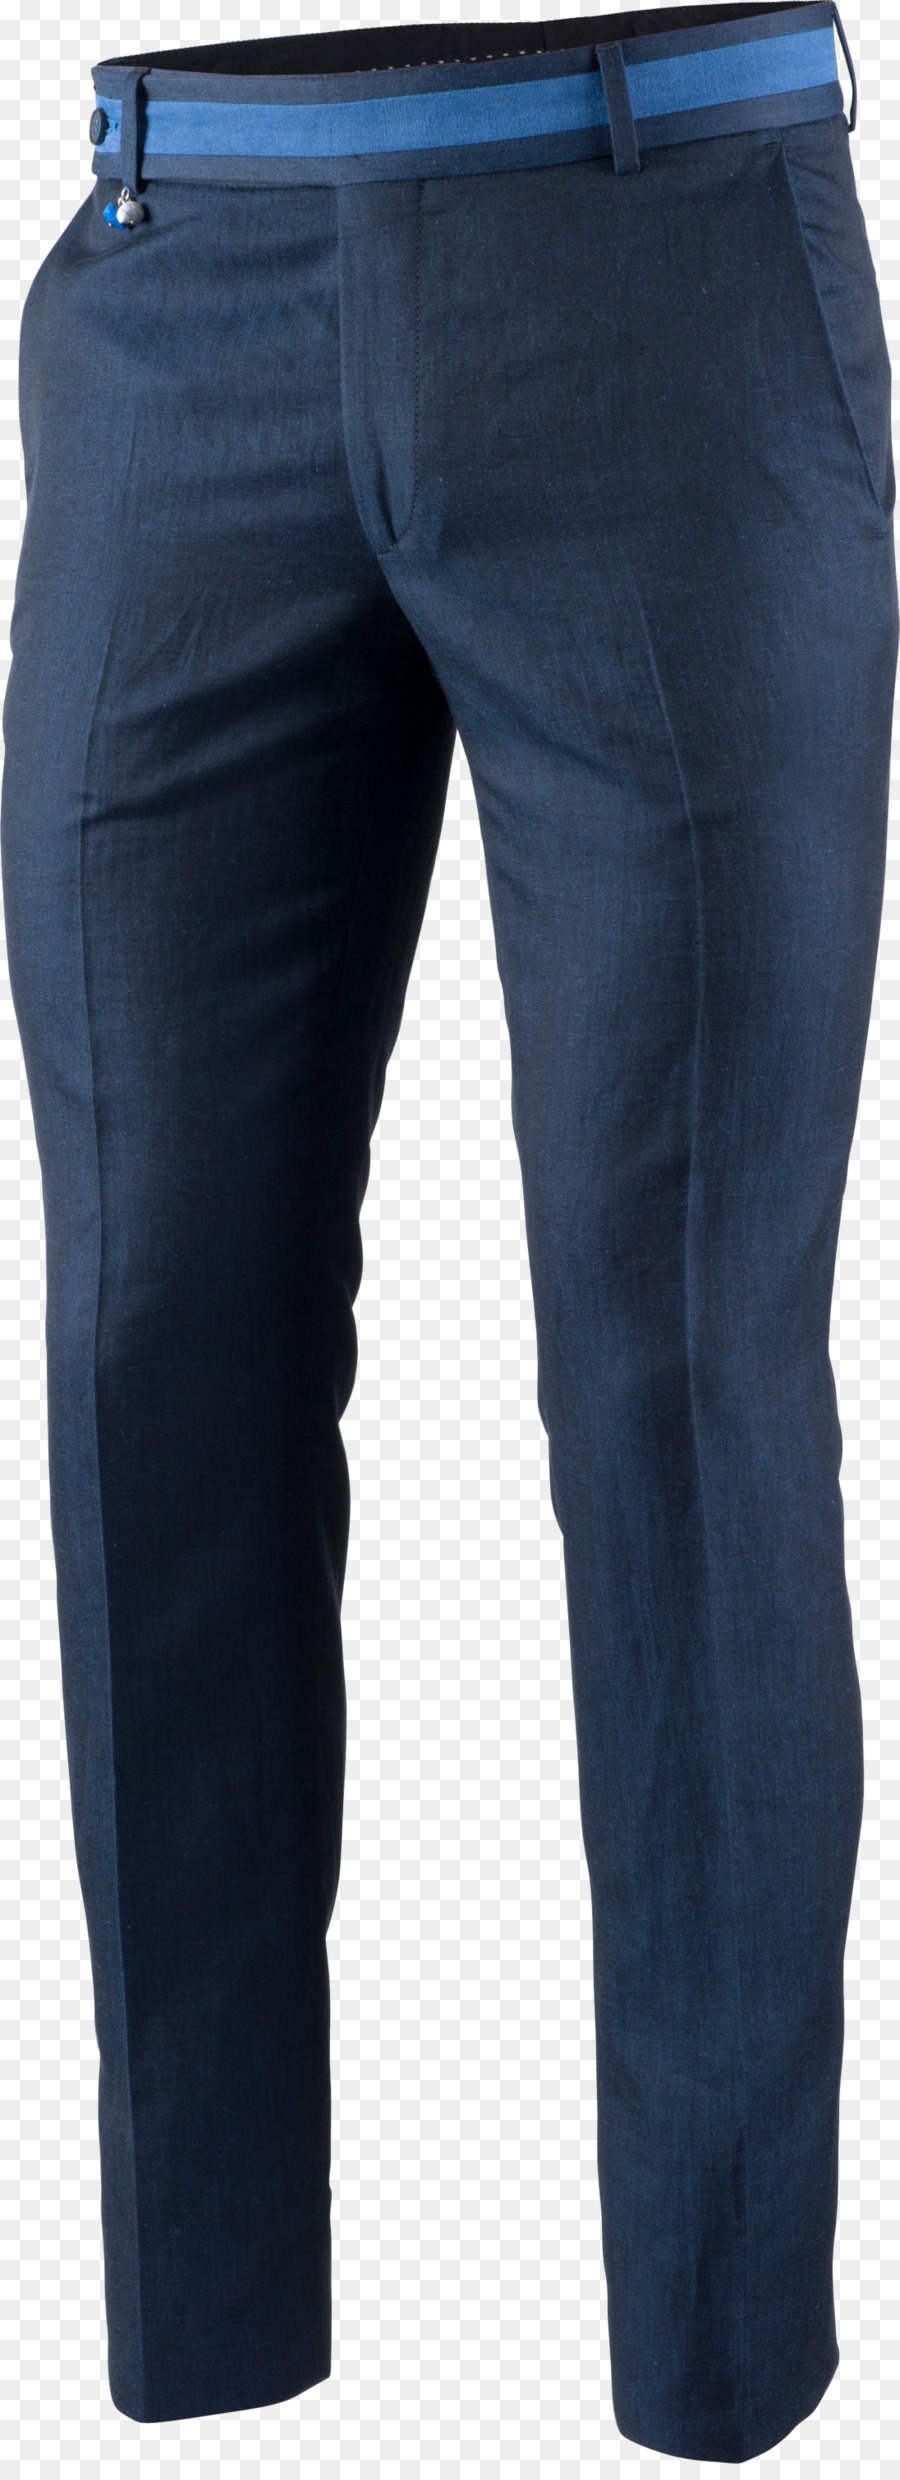 Jeans Denim pantaloni Slim-fit Pocket Abbigliamento - jeans